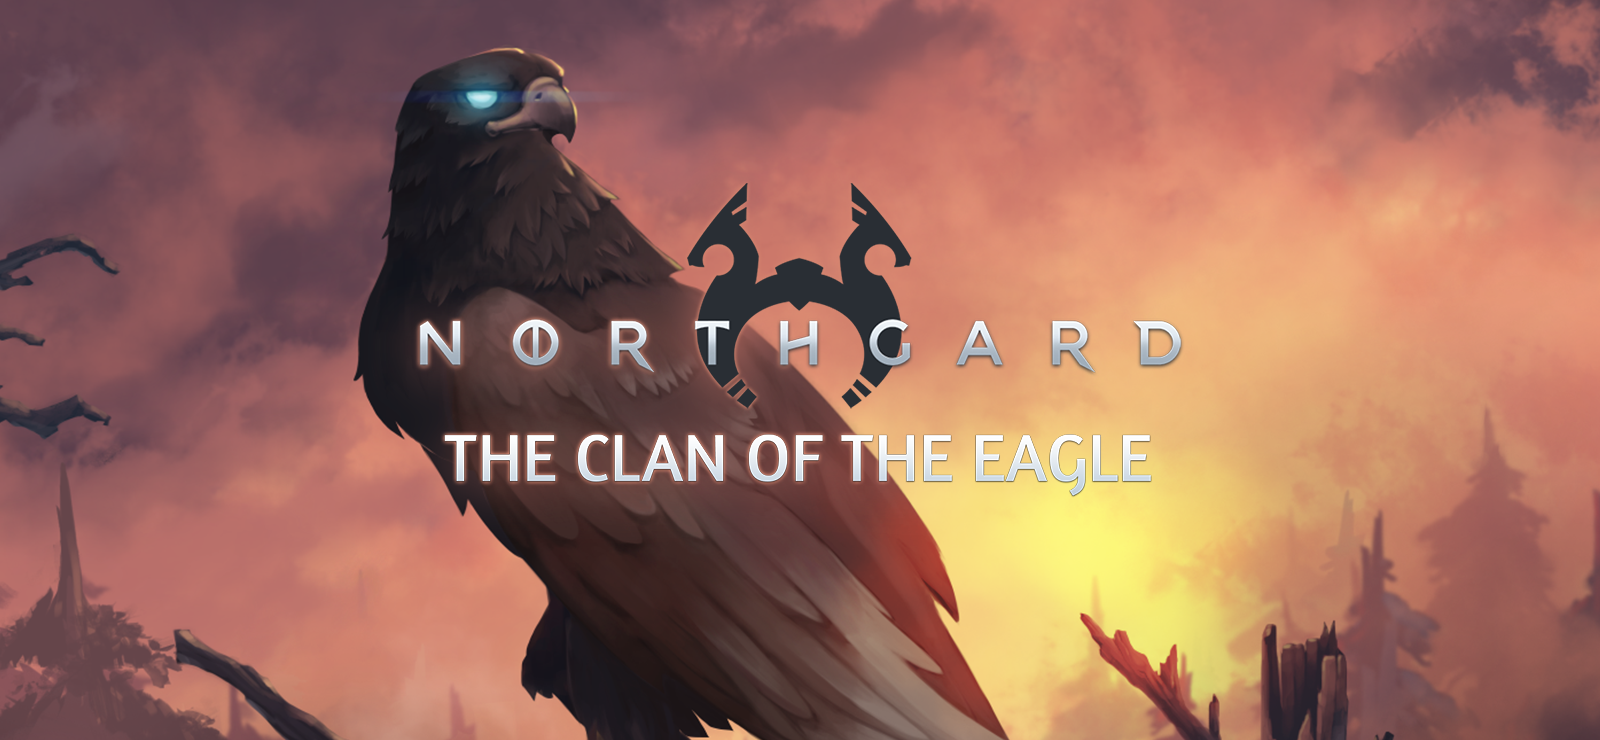 Northgard - Hræsvelg, Clan Of The Eagle